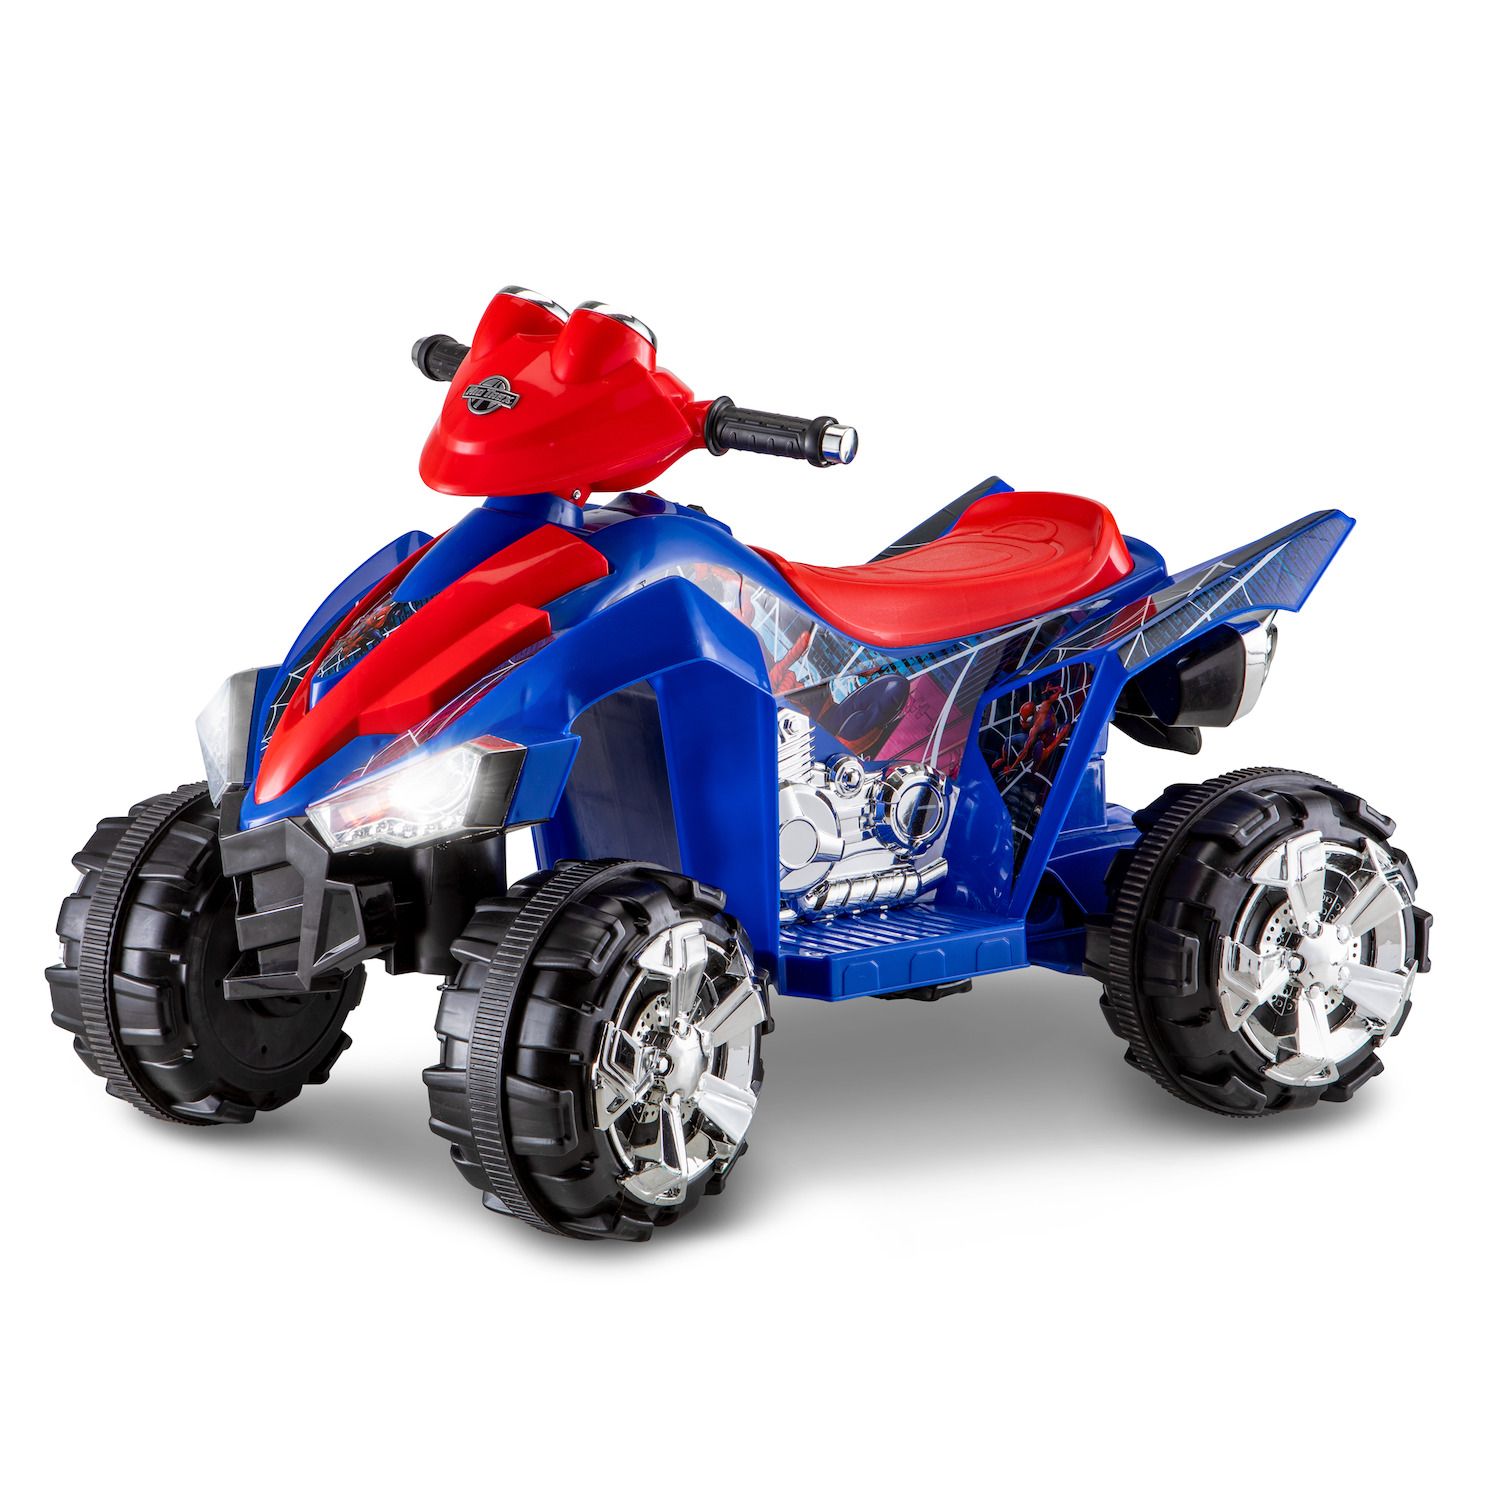 spiderman quad bike toy